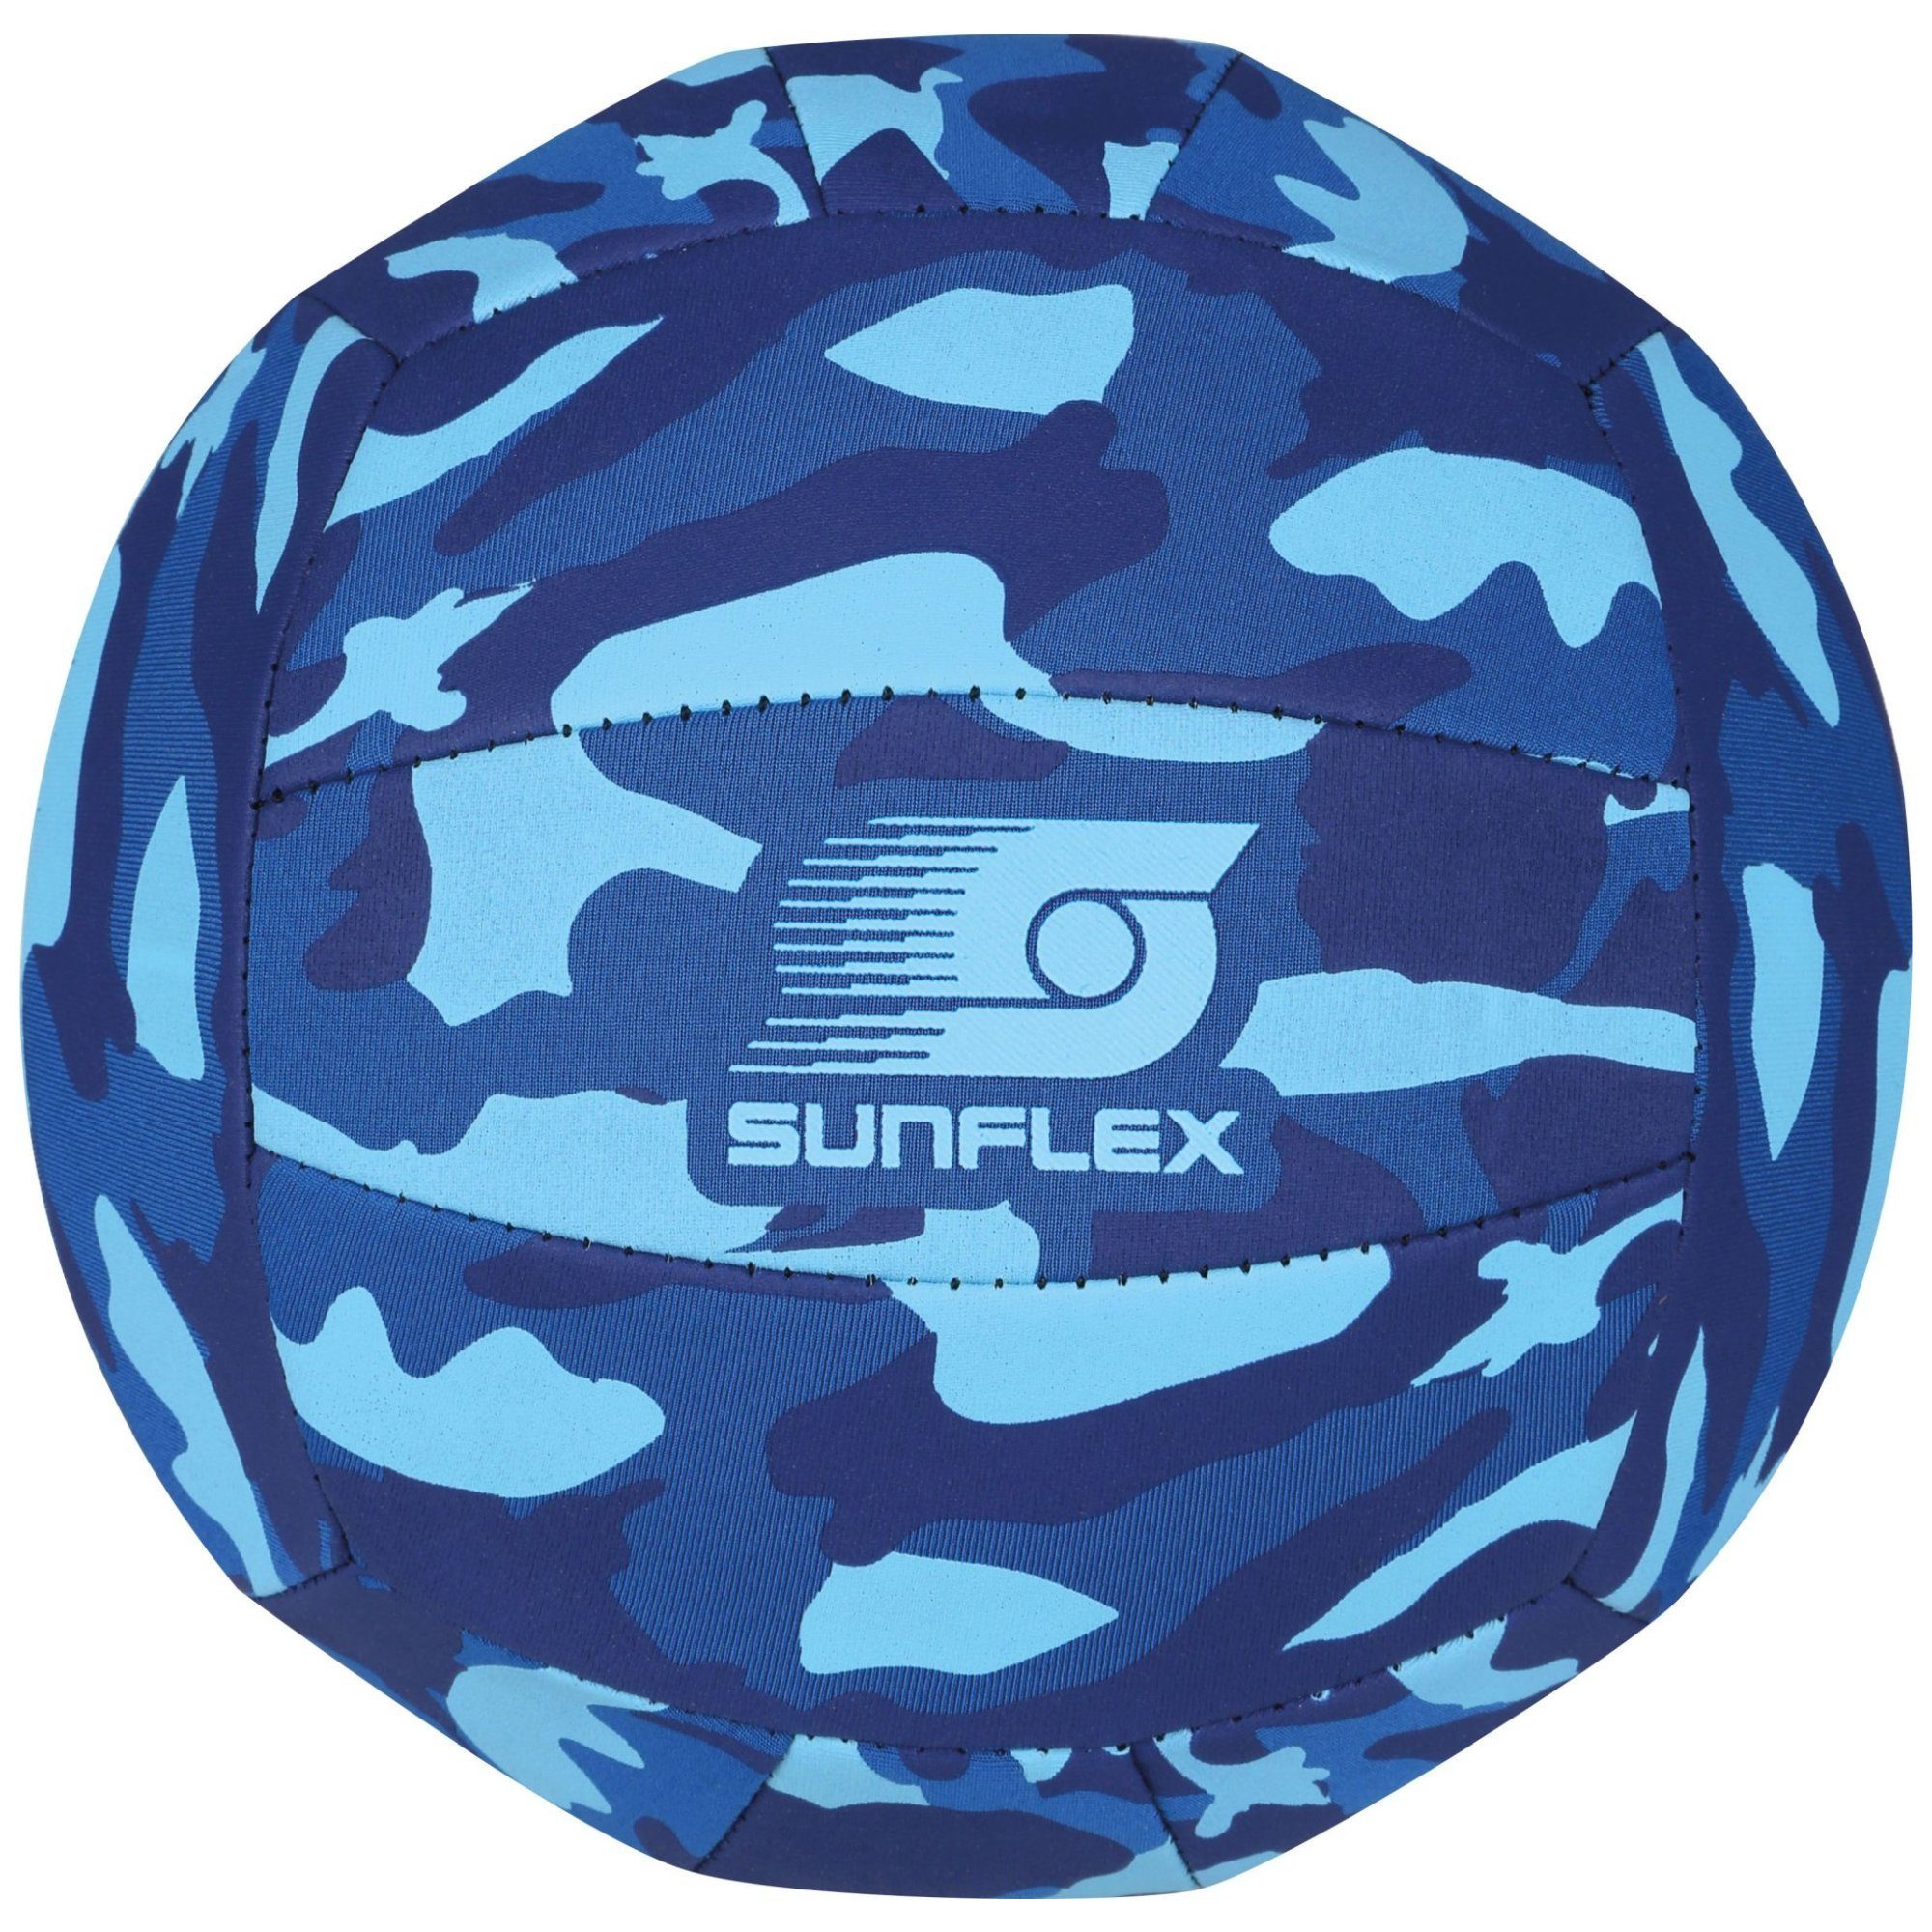 Sunflex Beachsoccerball sunflex Beach- und Funball Size 5 Camo blau